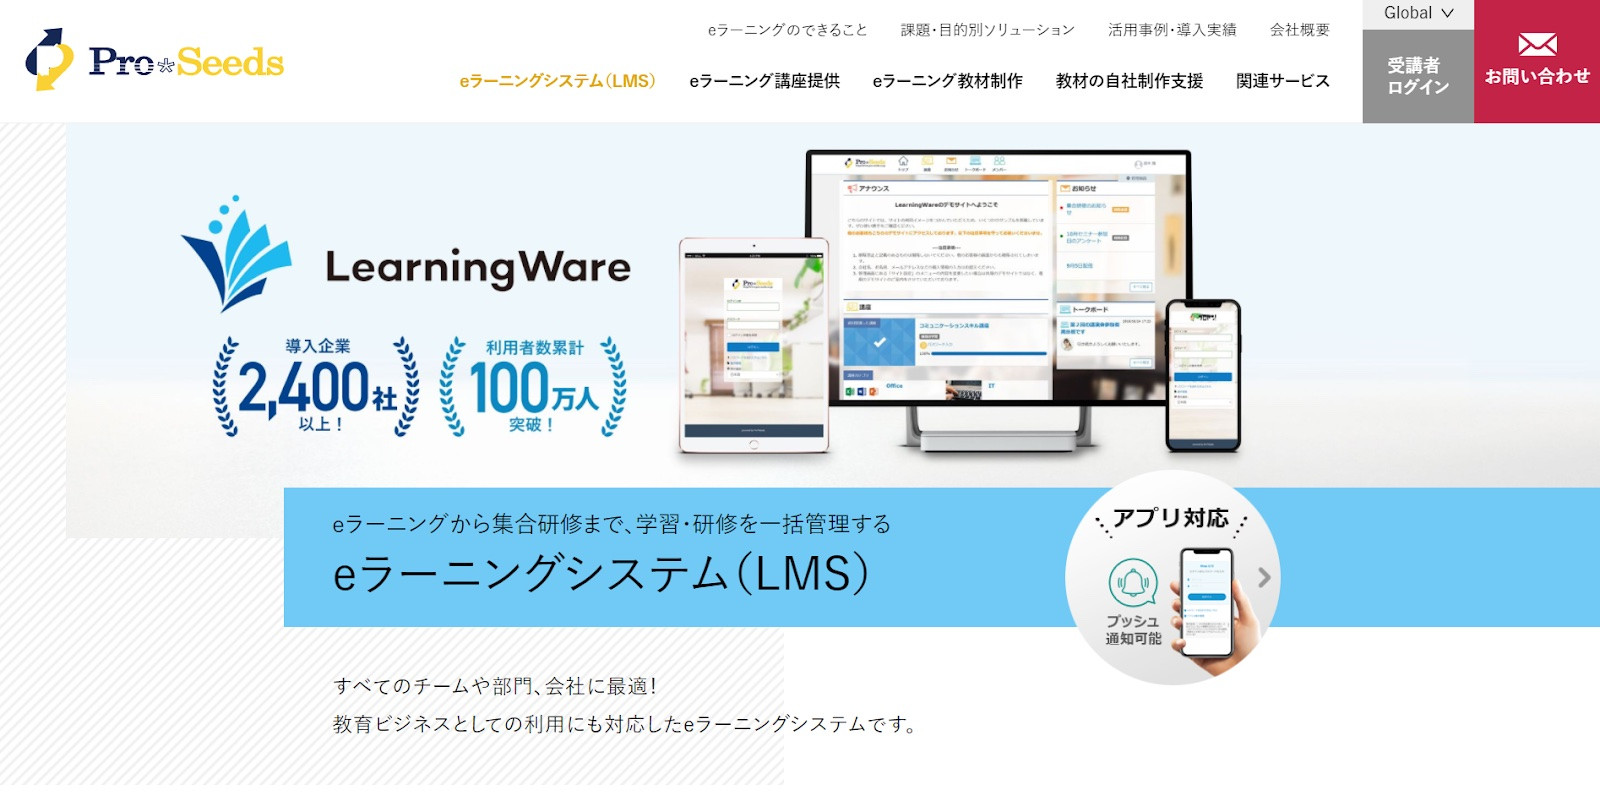 LearningWare